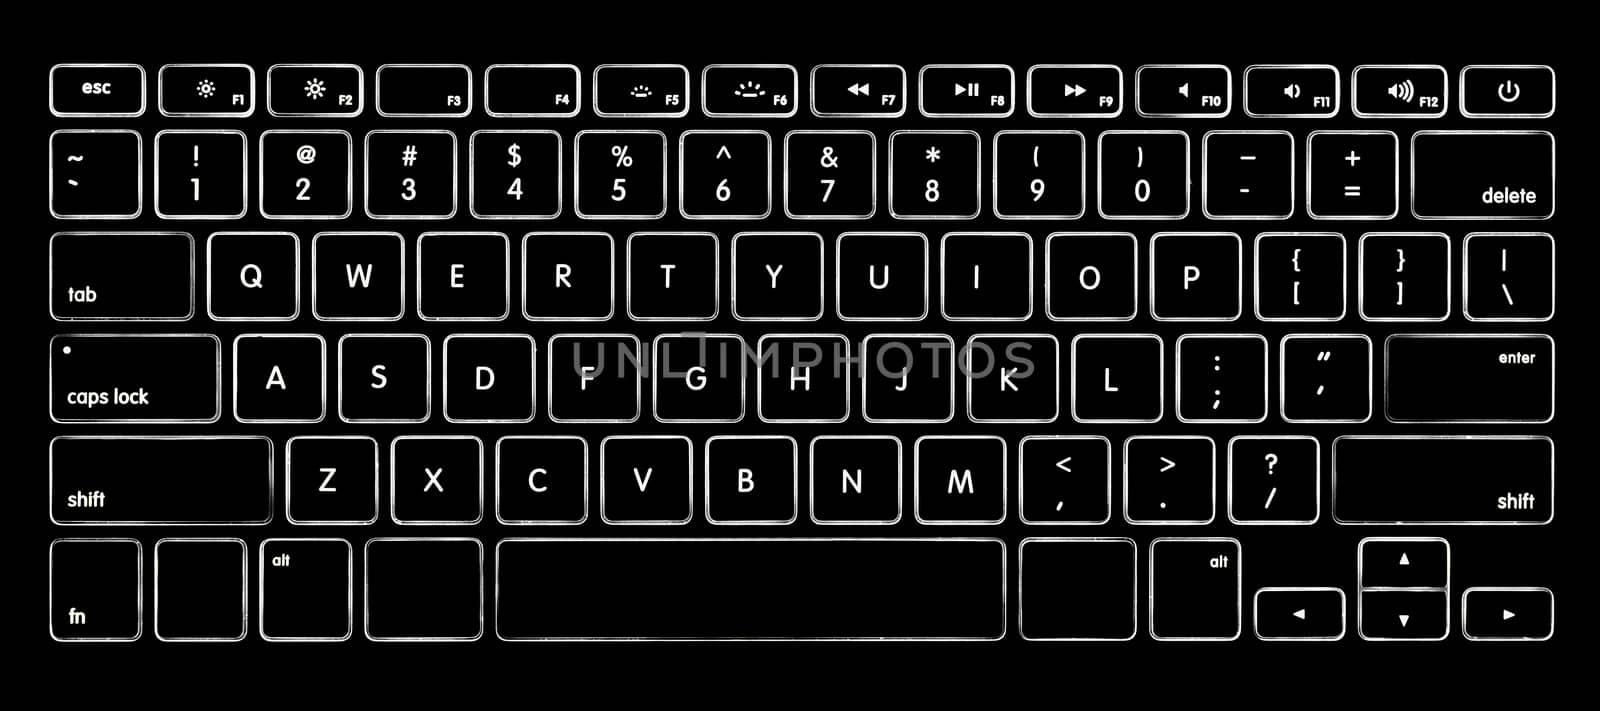 computer keyboard with illuminated backlight.